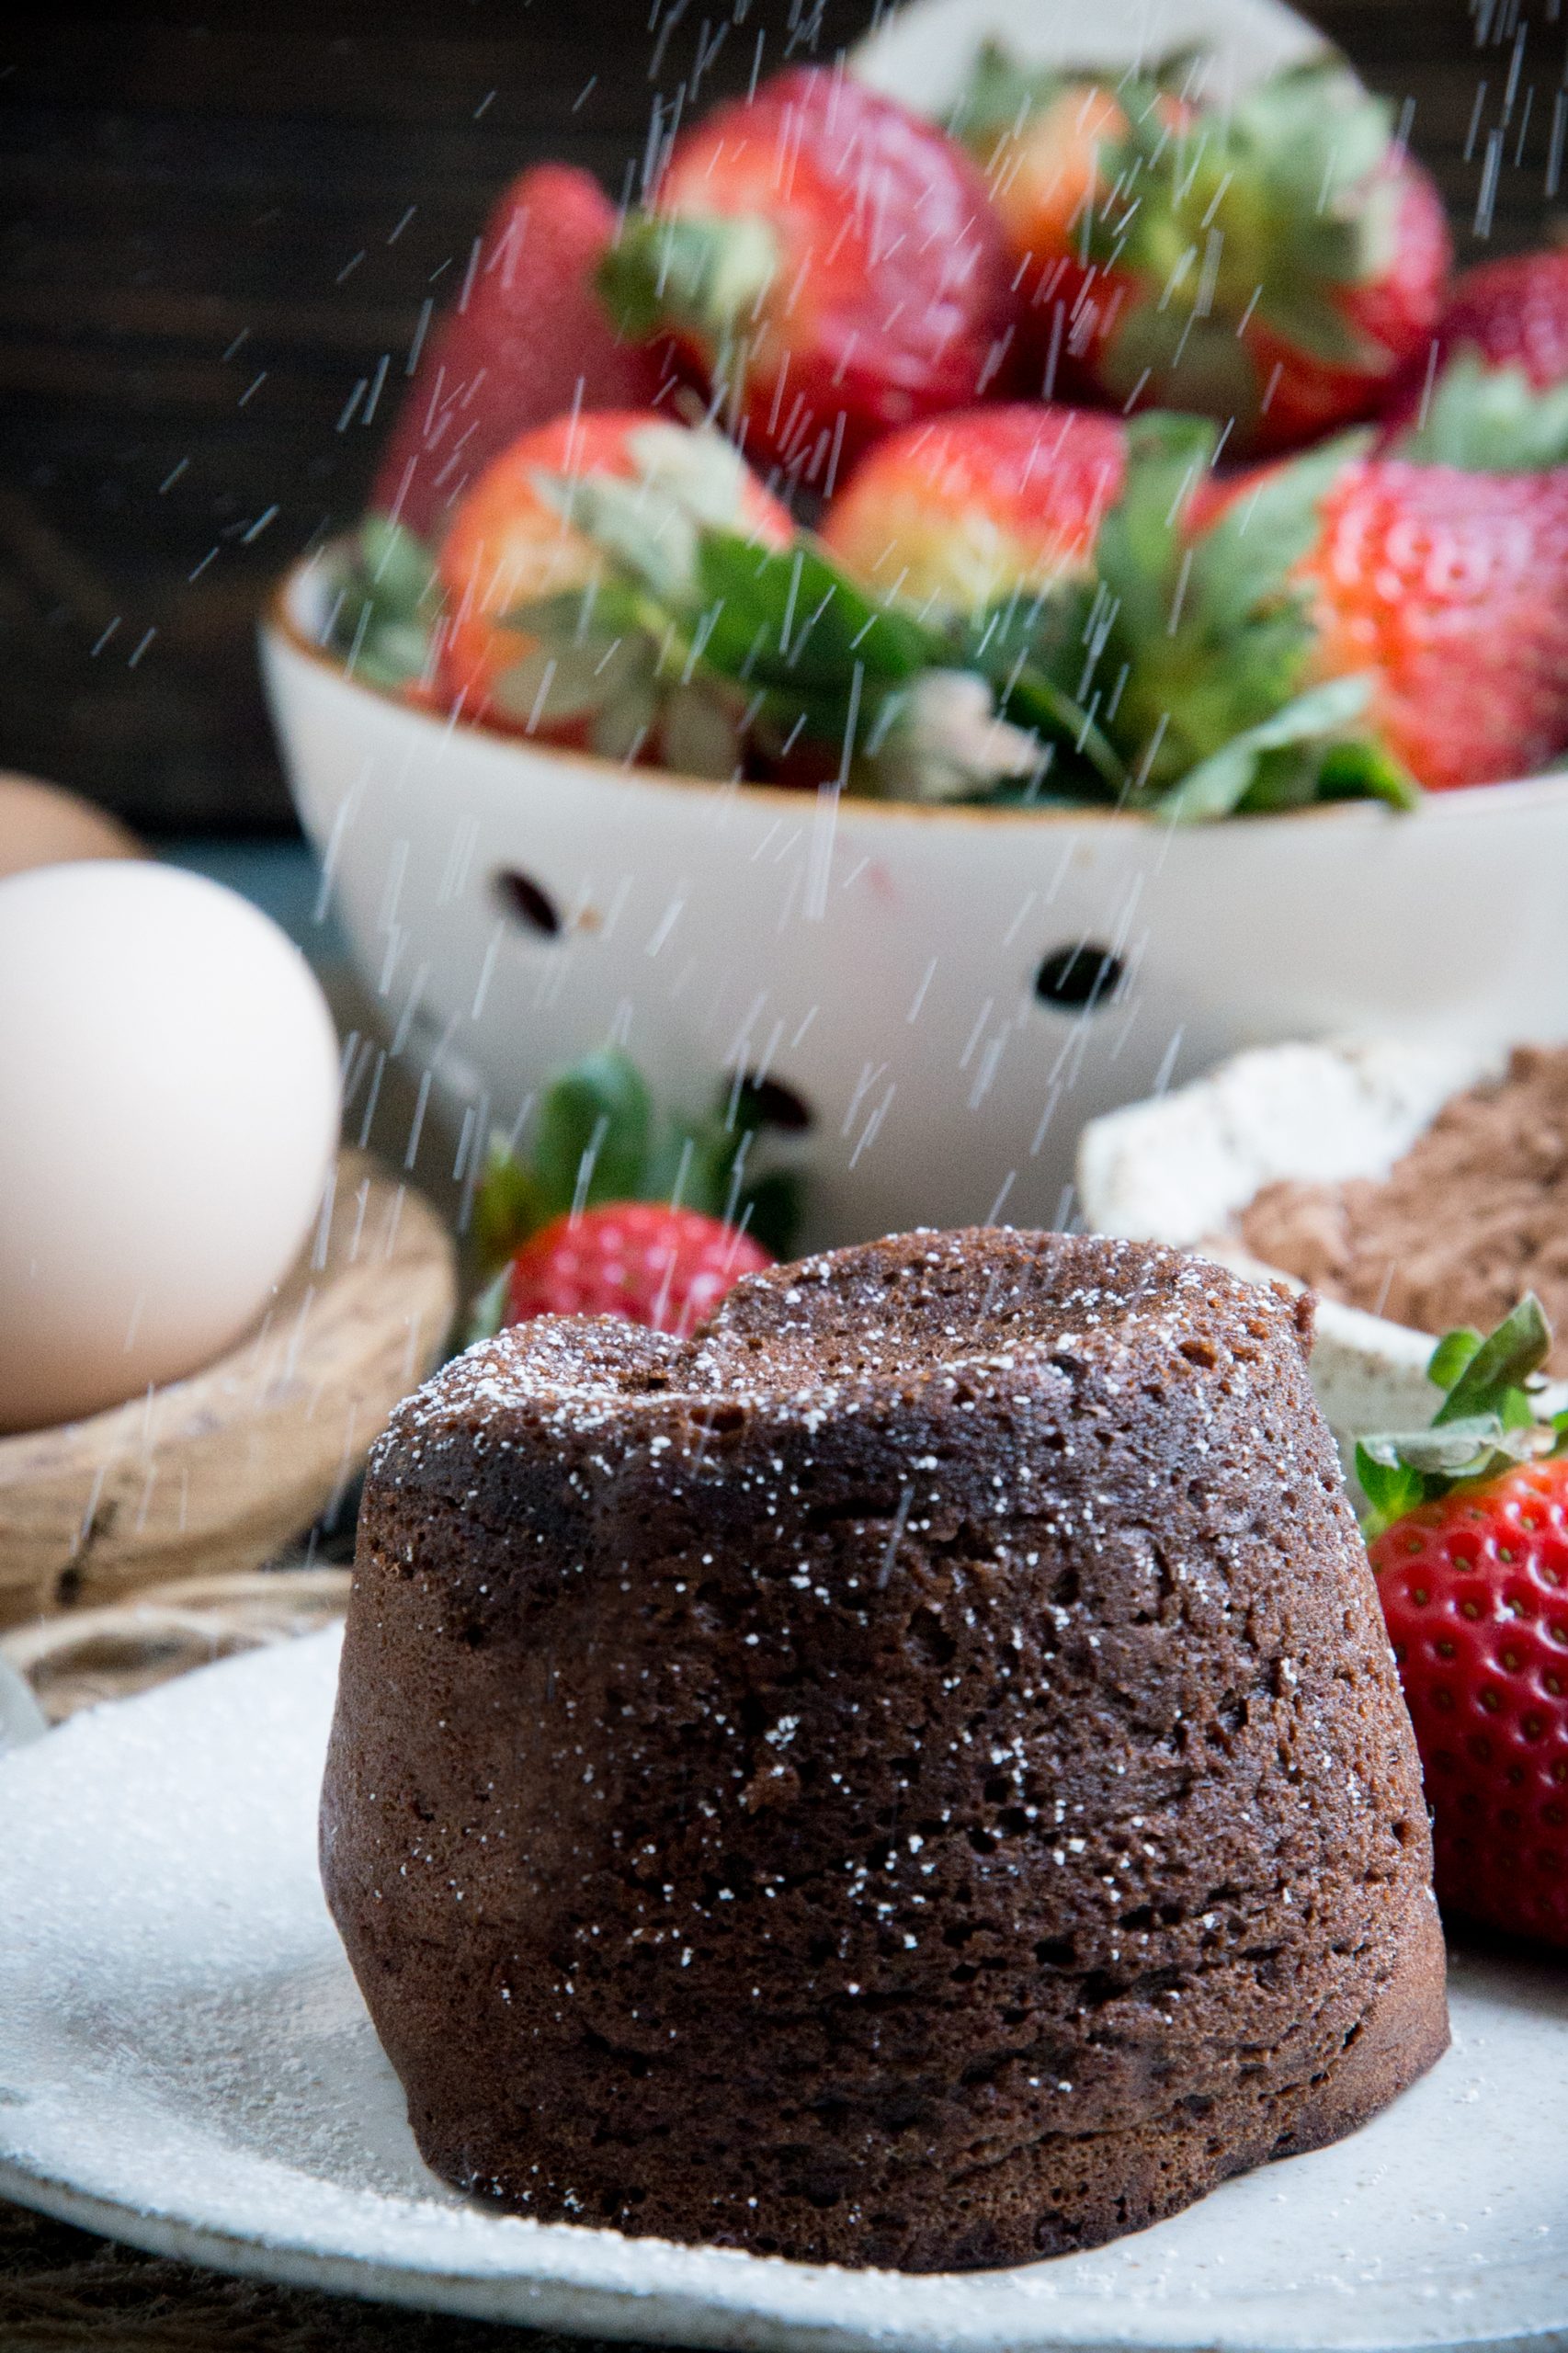 Sprinkling powdered sweetener over a keto chocolate lava cake.